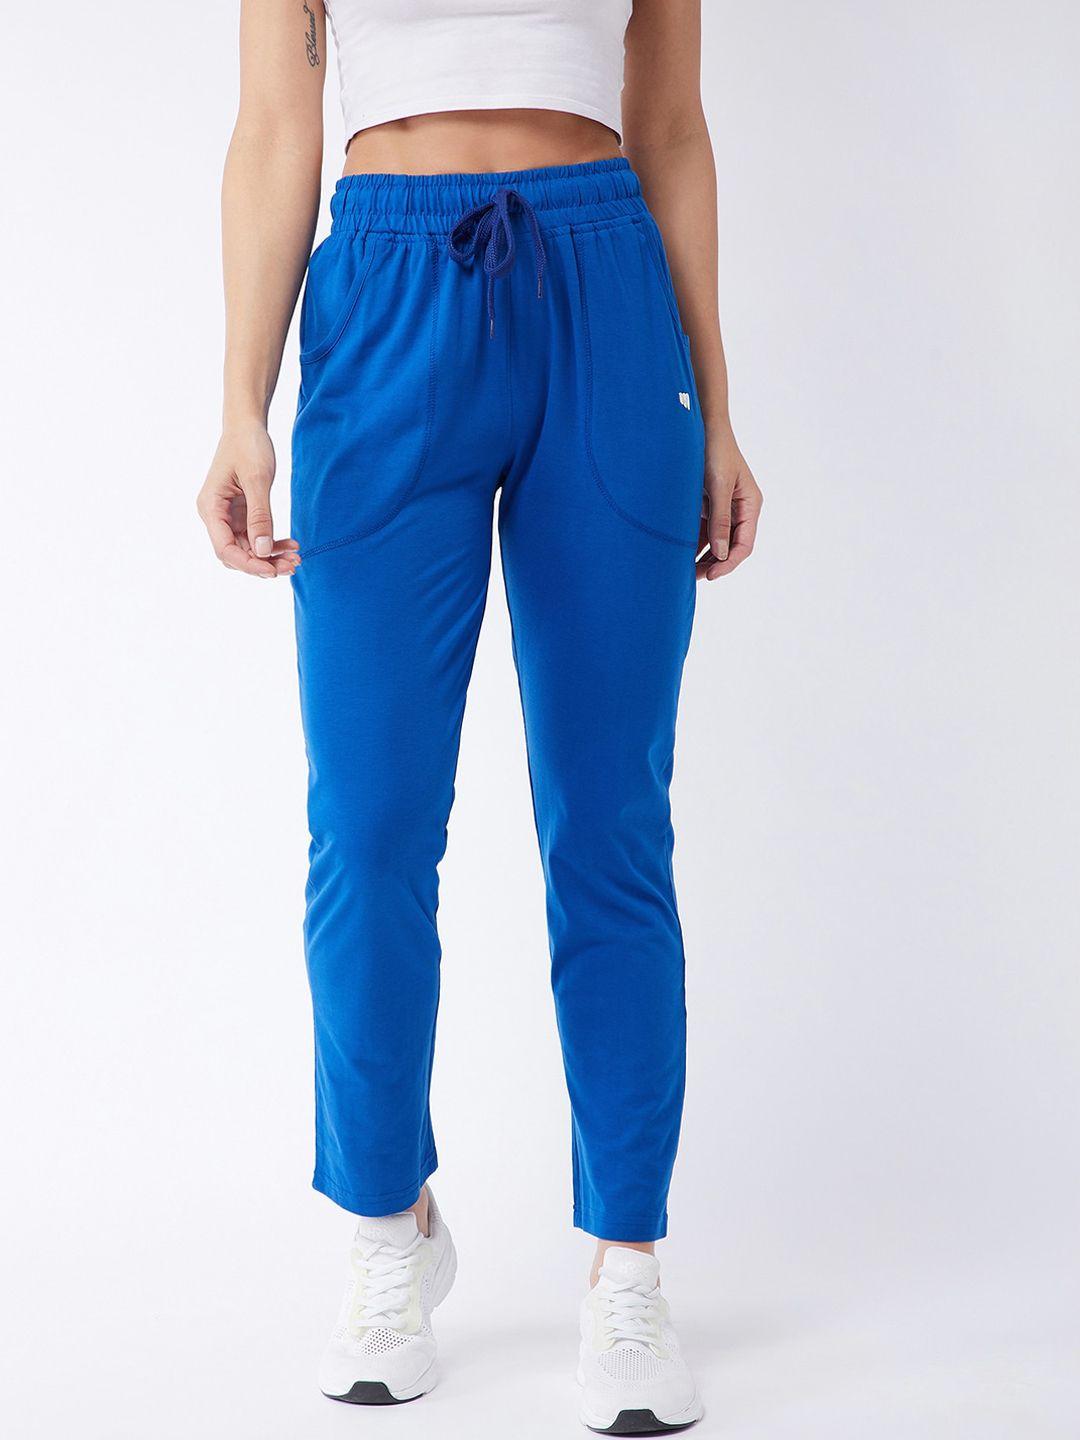 Modeve Women Blue Solid Track Pants